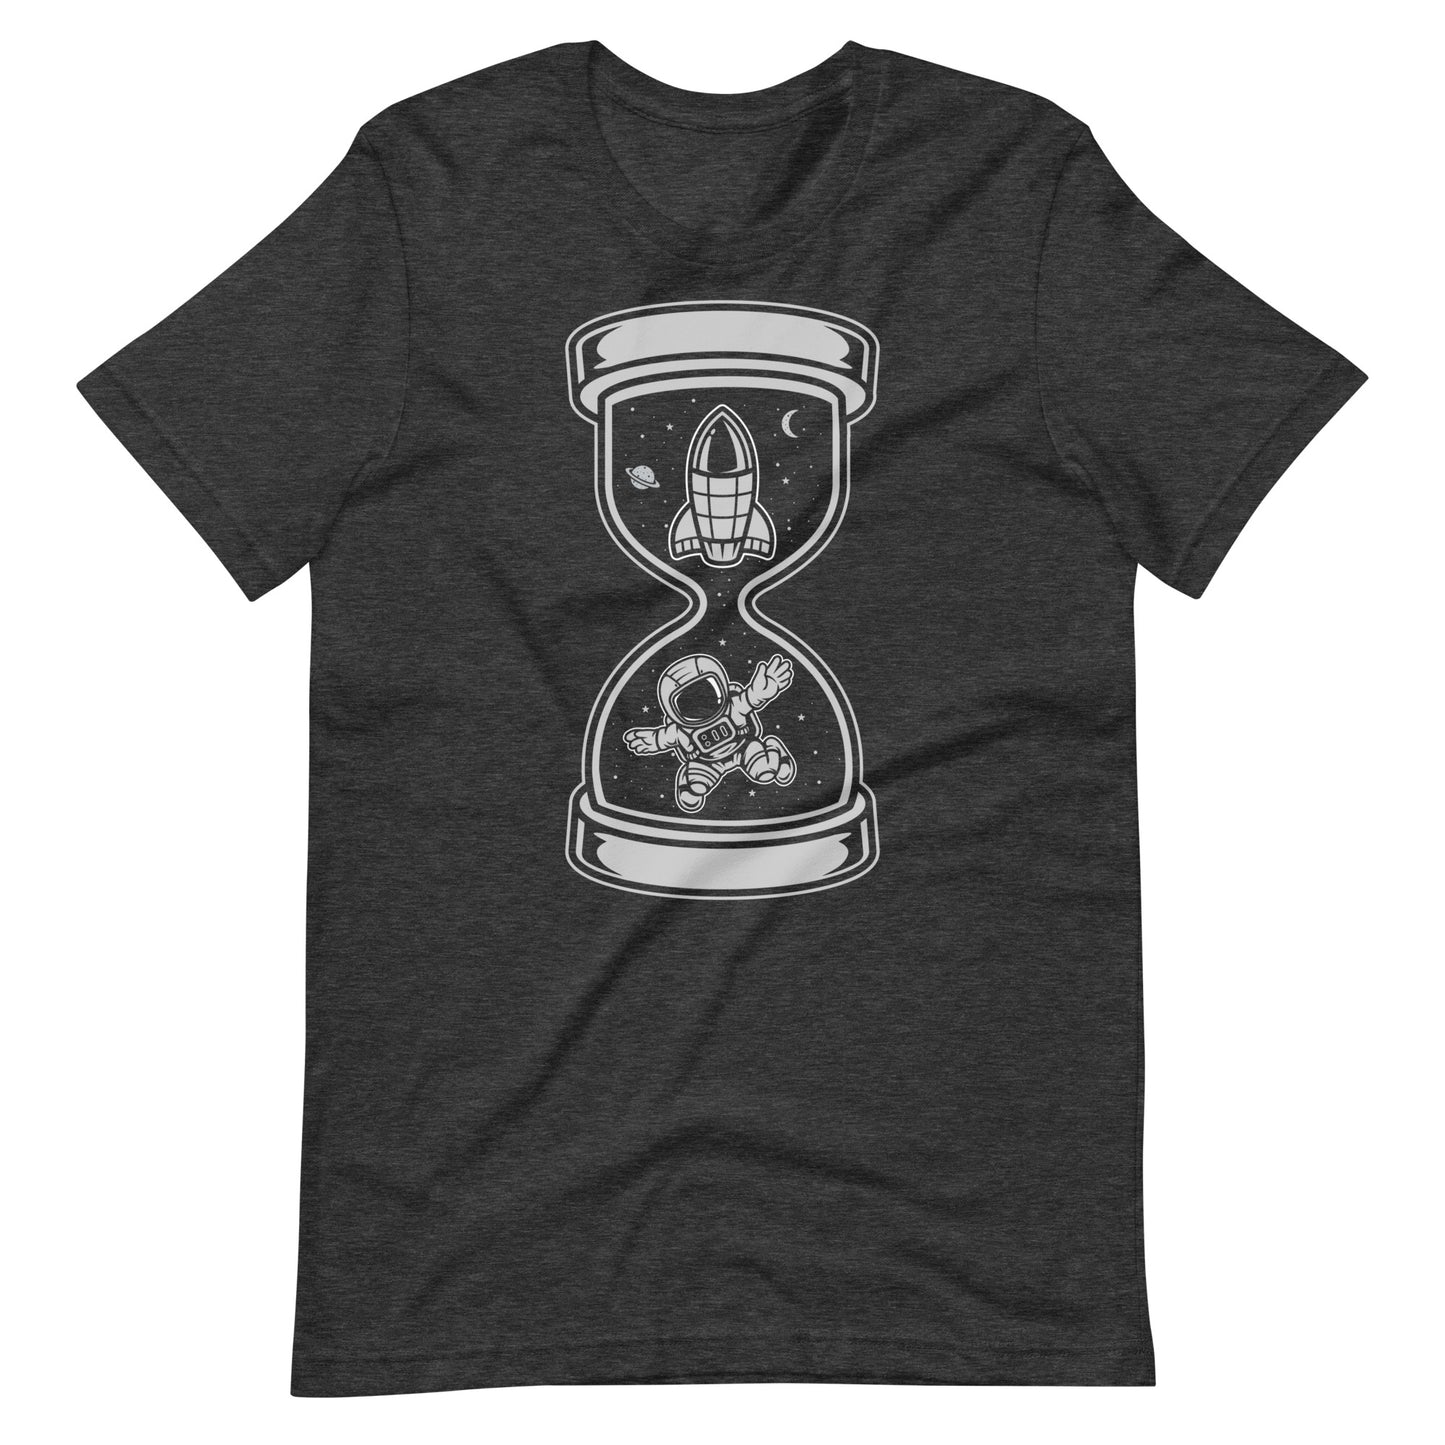 Astronaut Time - Men's t-shirt - Dark Grey Heather Front